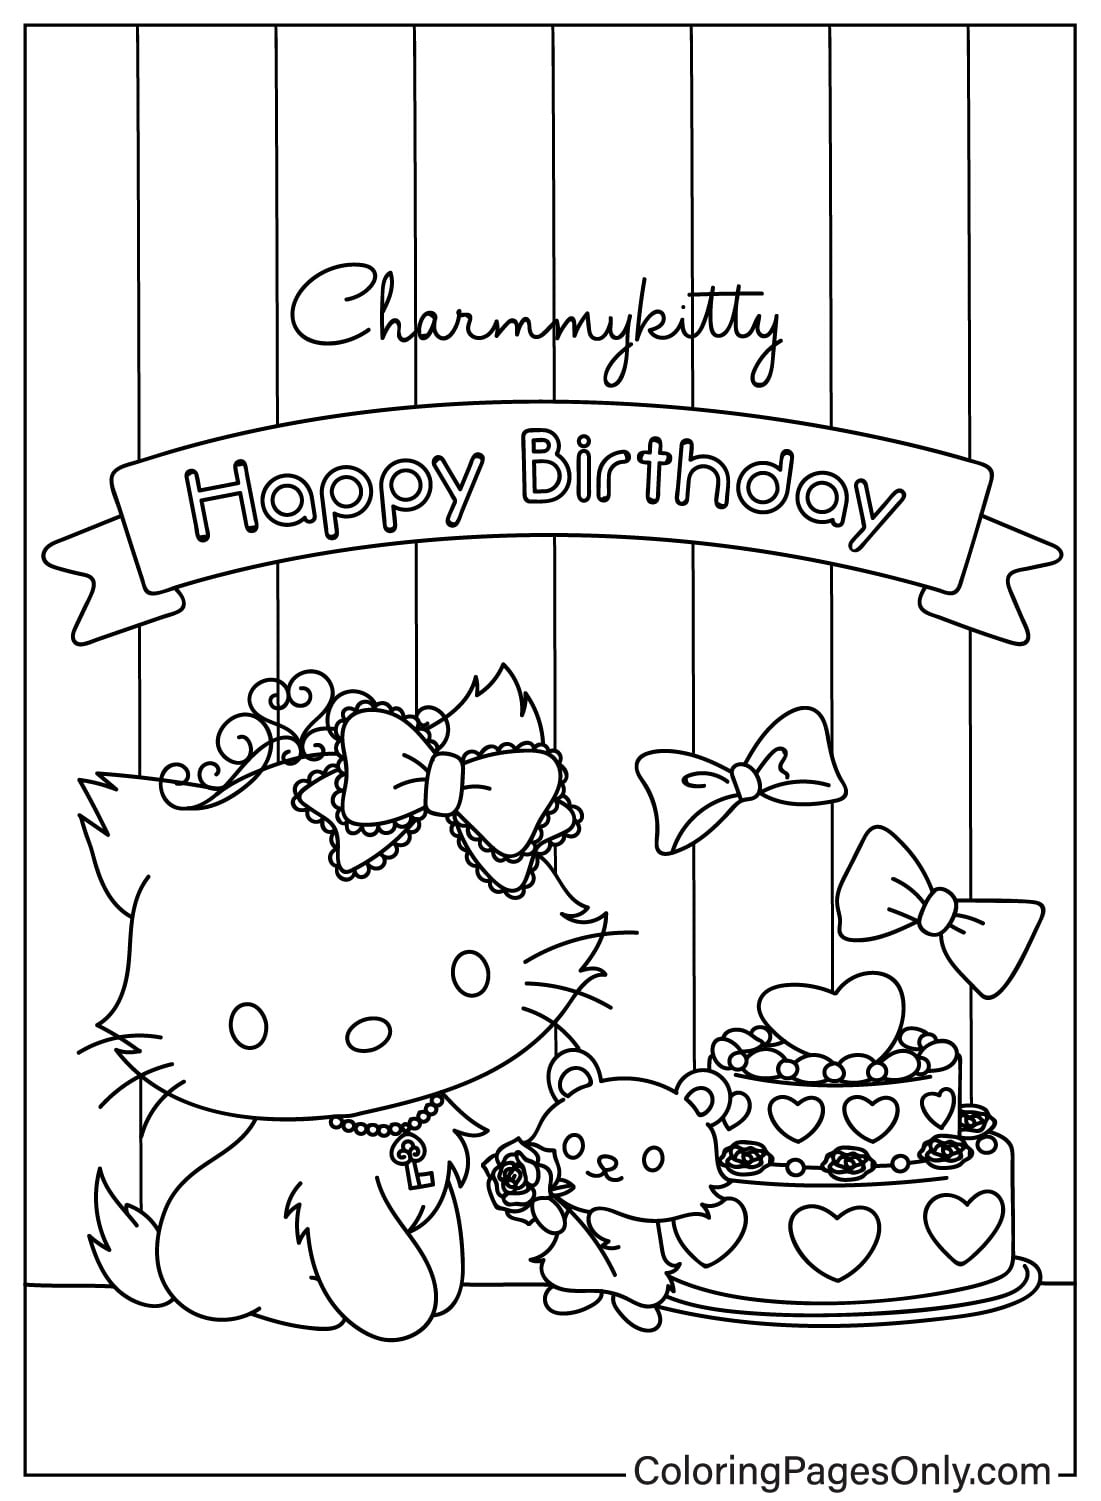 Desenhos para colorir de Feliz Aniversário Charmmy Kitty de Charmmy Kitty